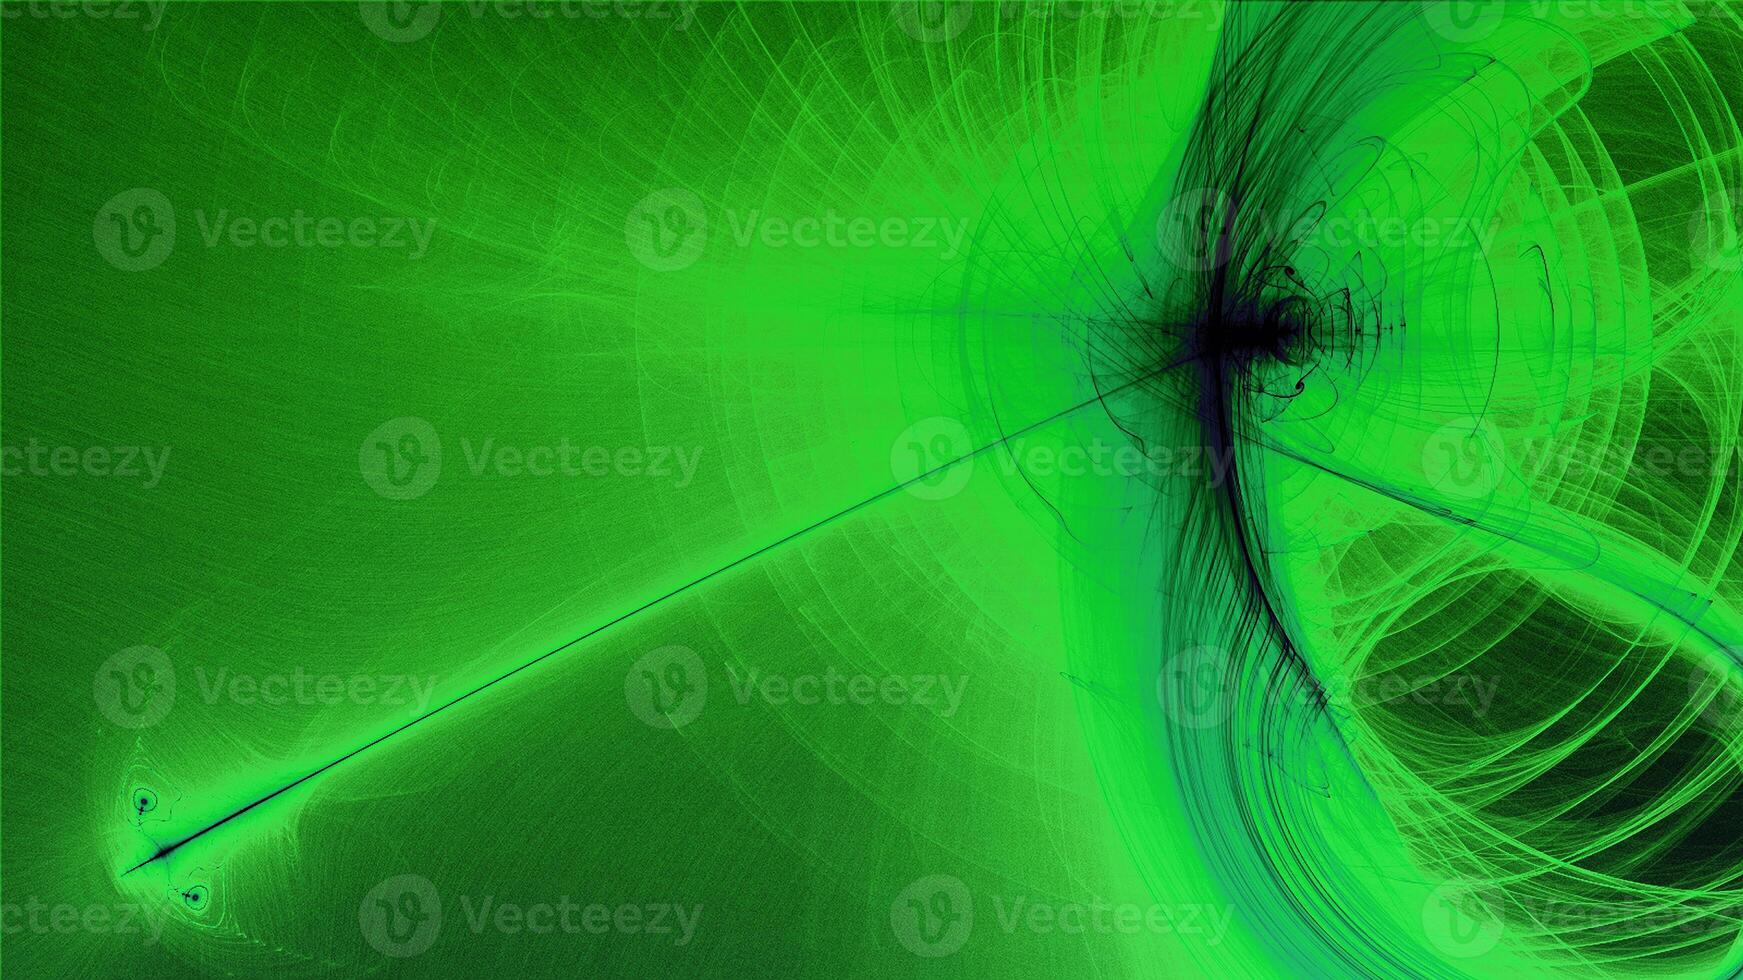 abstrato fundo linhas curvas e partículas verde roxa foto